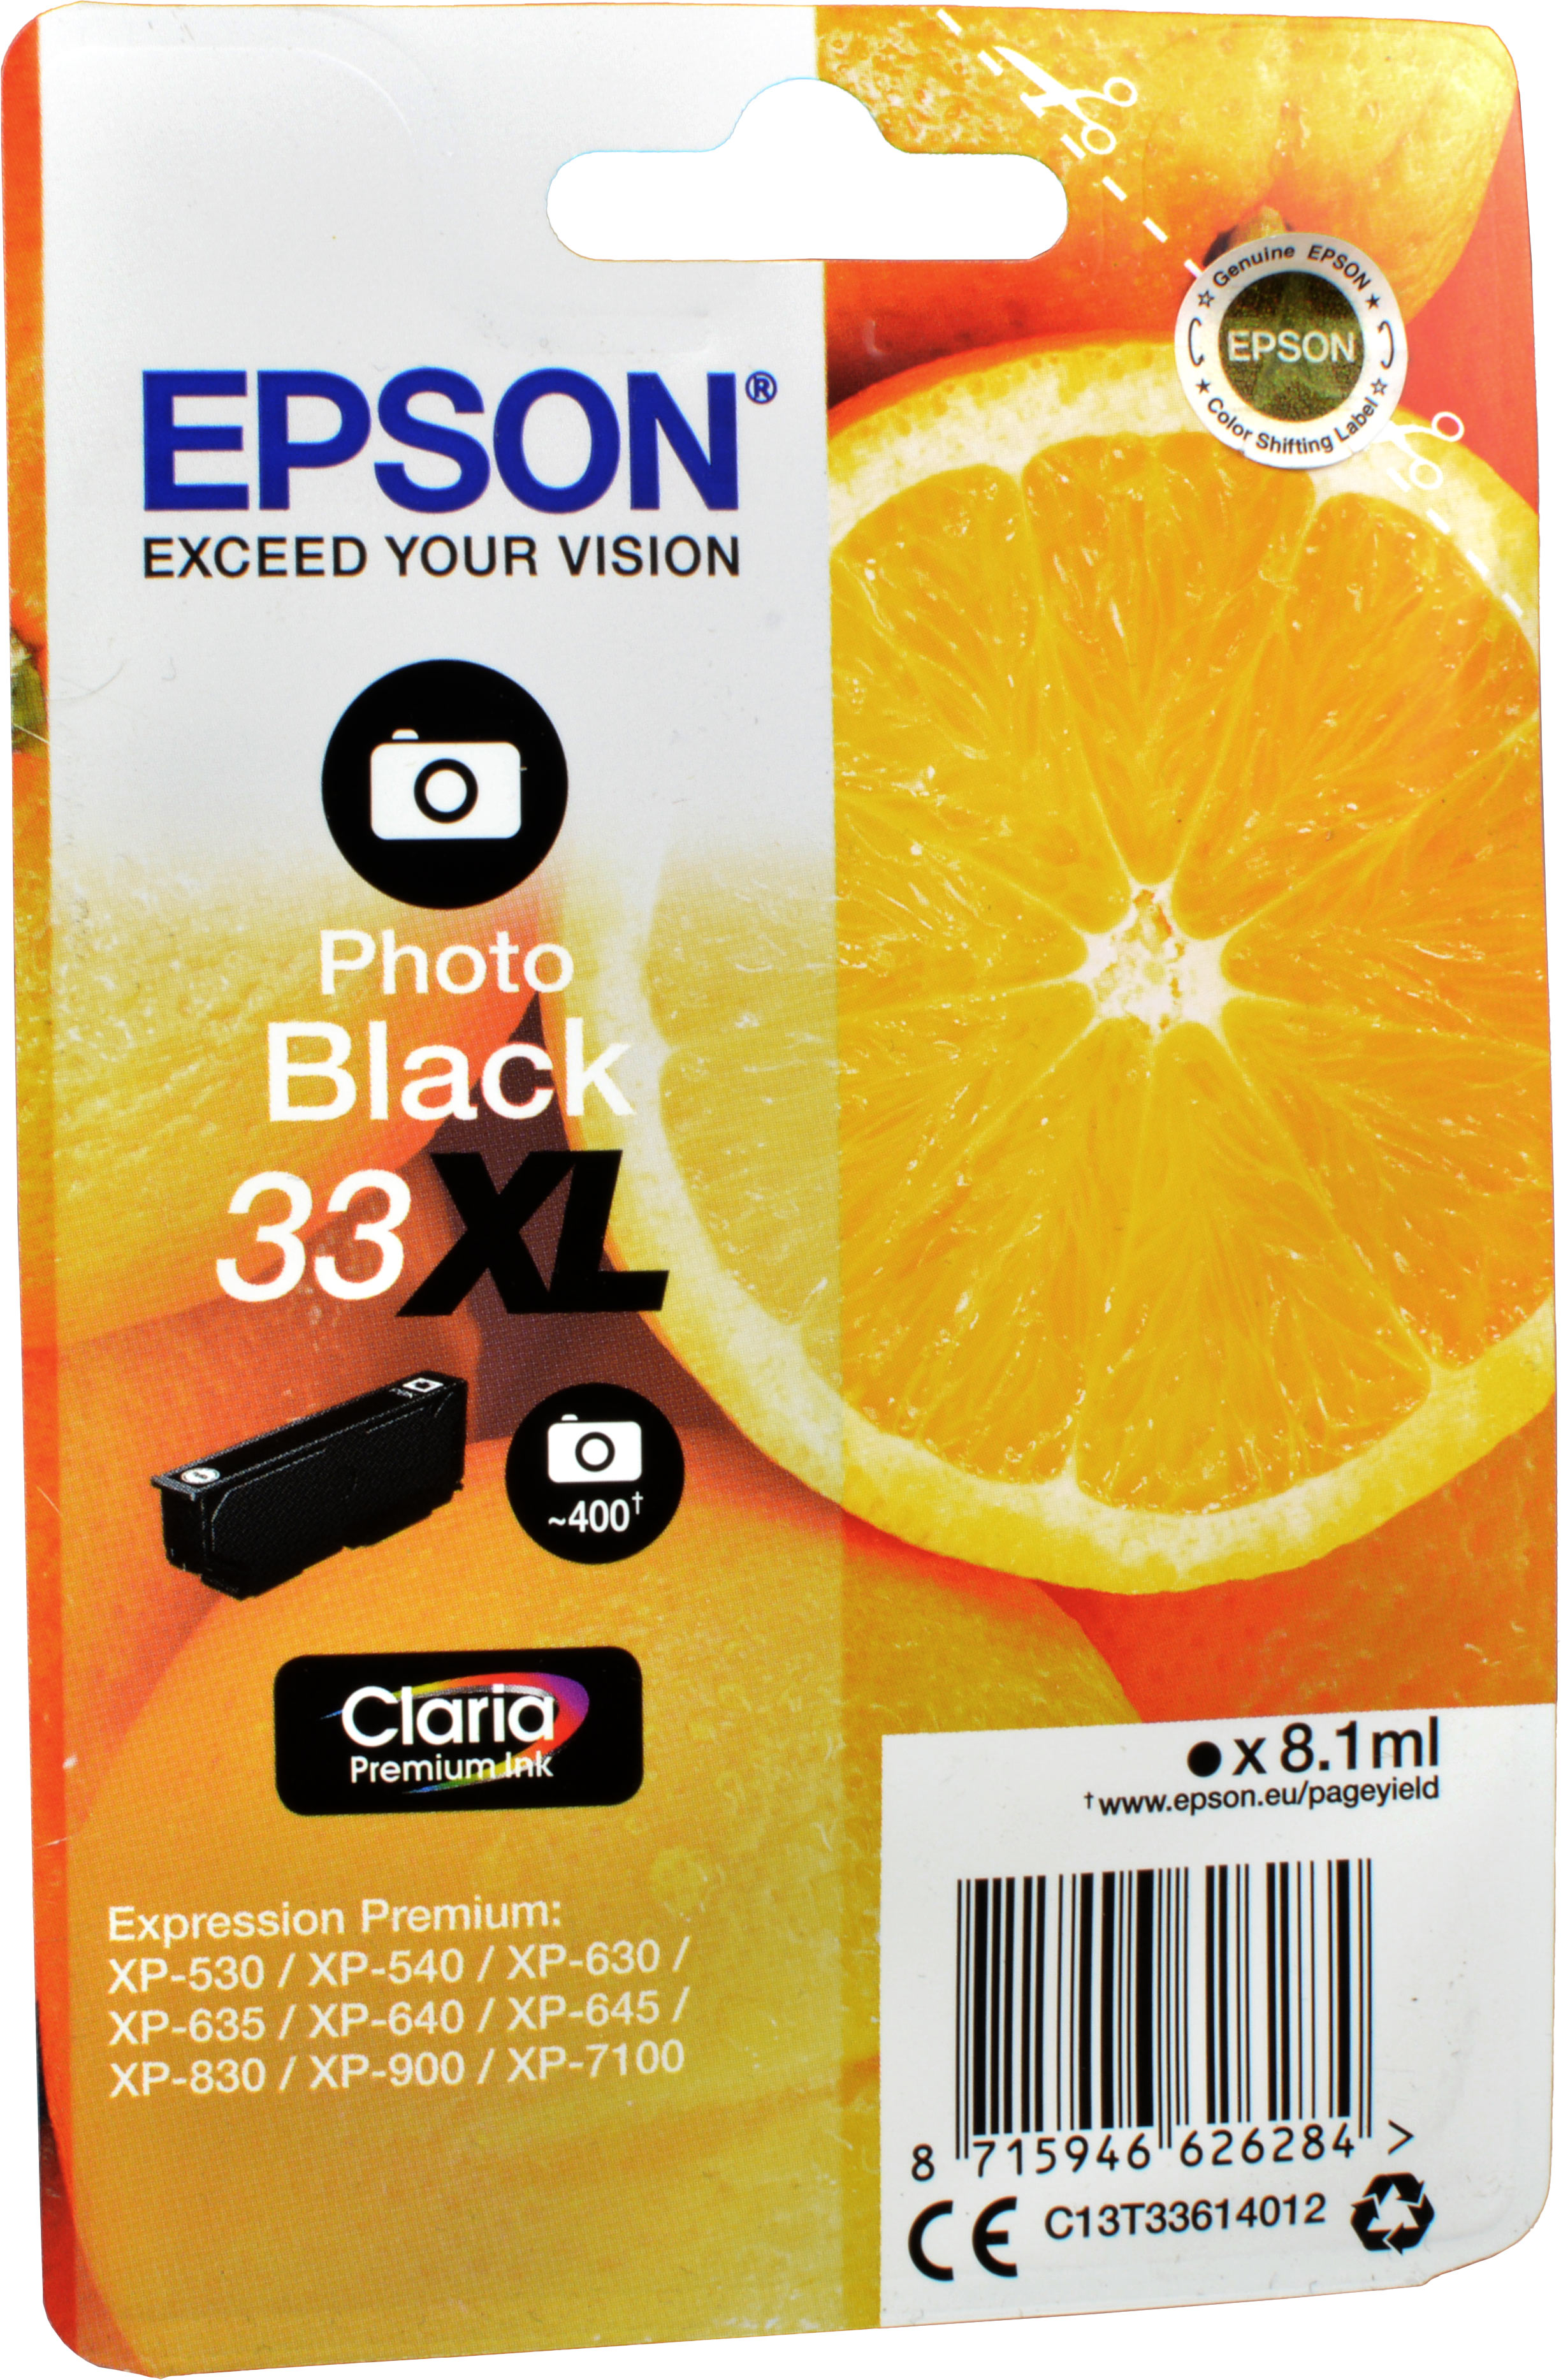 Epson Tinte C13T33614012  33XL  foto schwarz